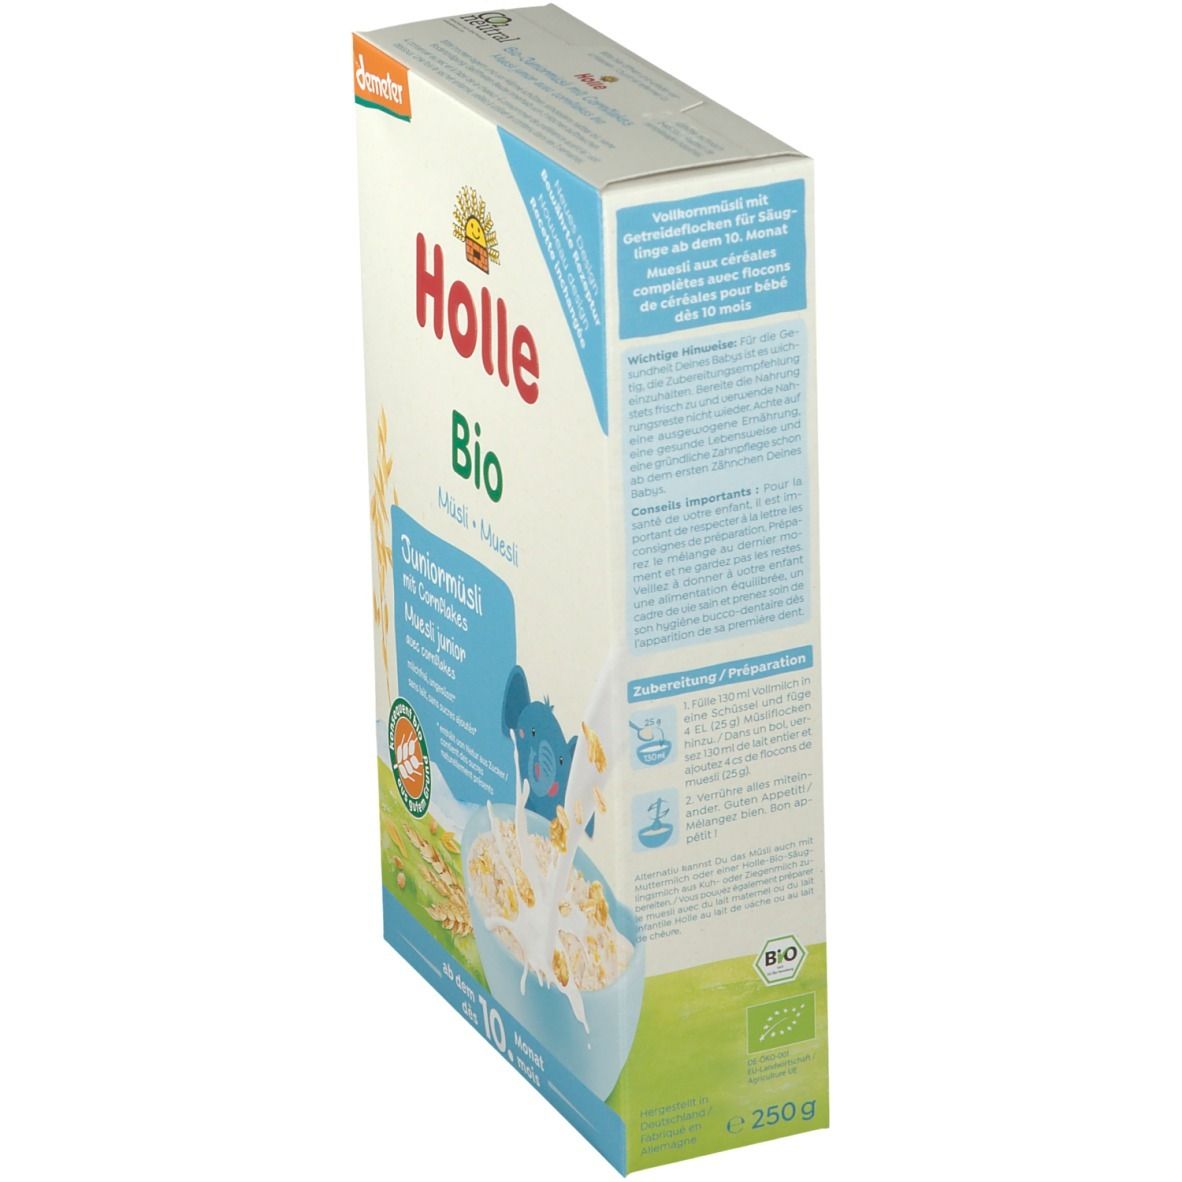 Holle Bio Juniormüsli Mehrkorn mit Cornflakes ab dem 10. Monat